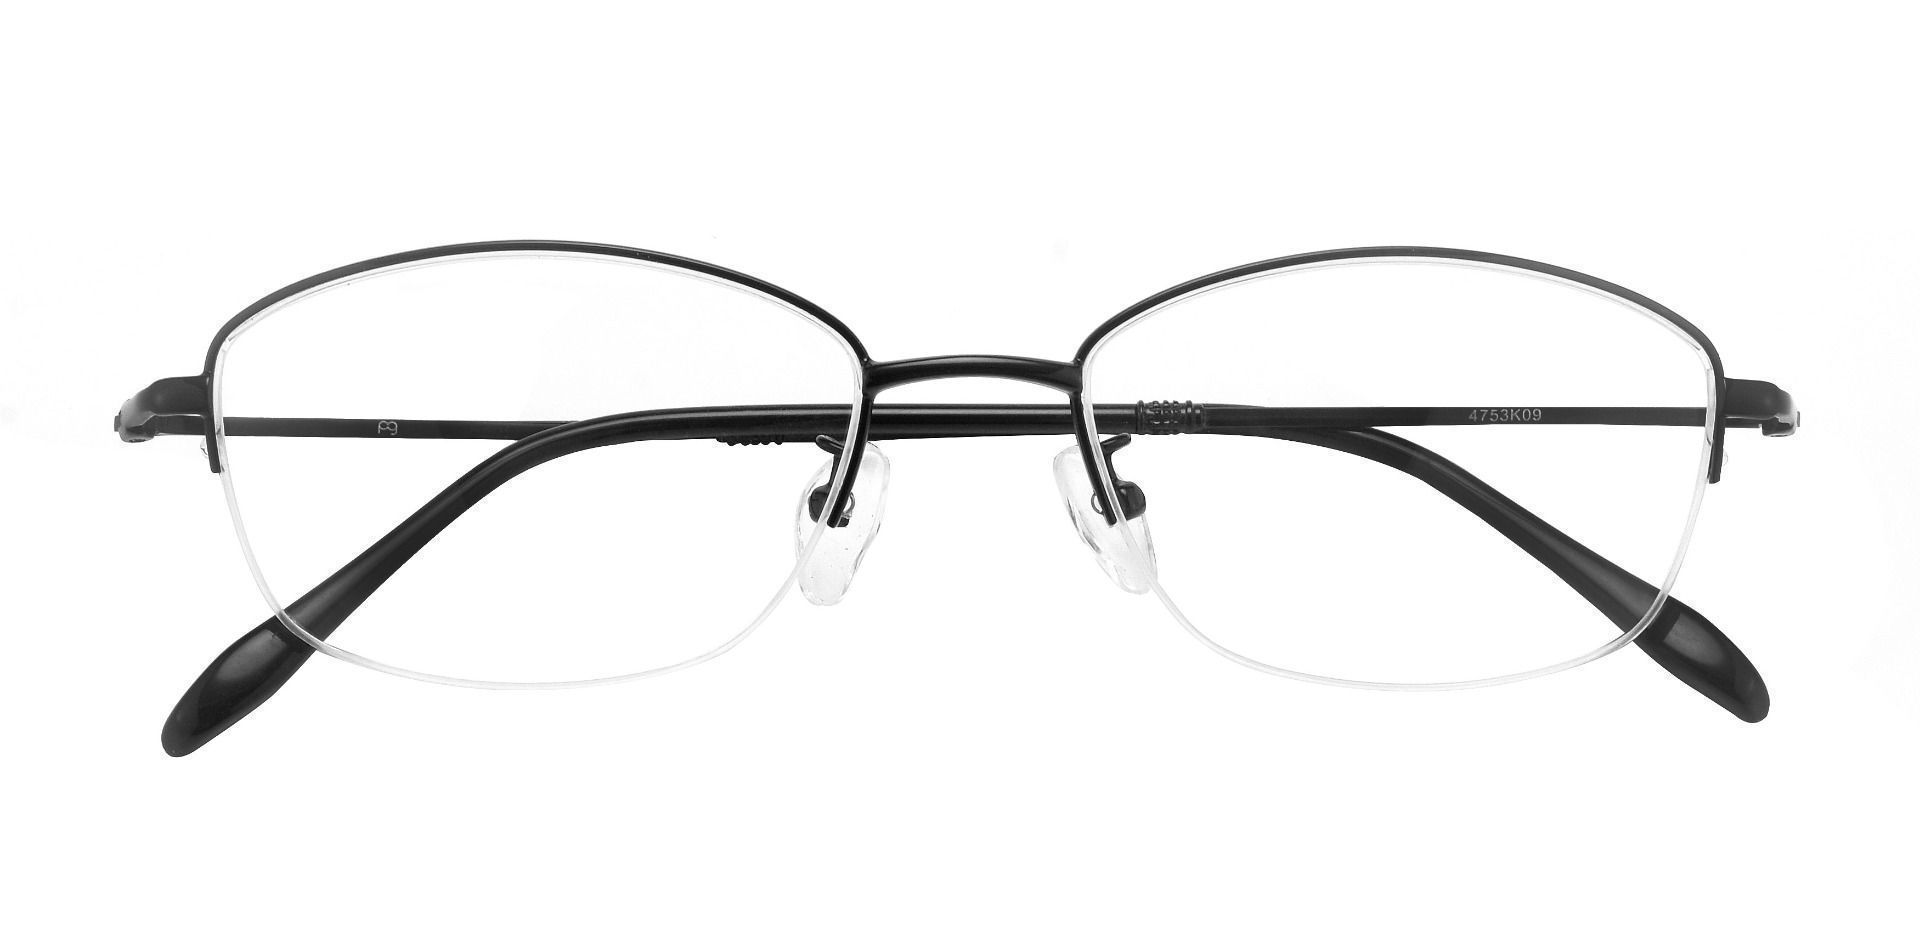 Mendoza Oval Reading Glasses - Black